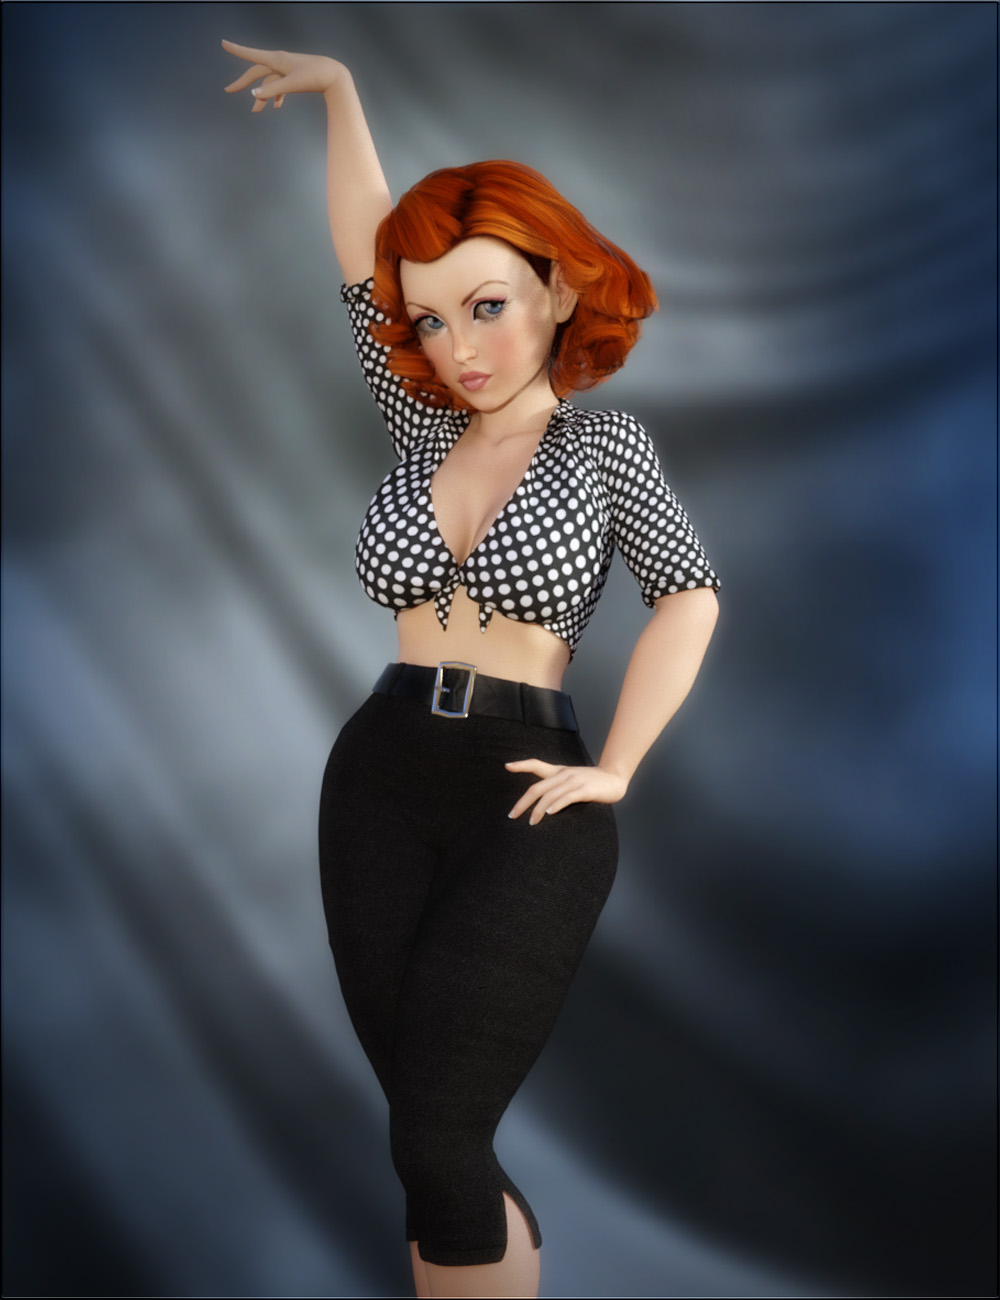 VYK Betsy for The Girl 8 by: vyktohria, 3D Models by Daz 3D